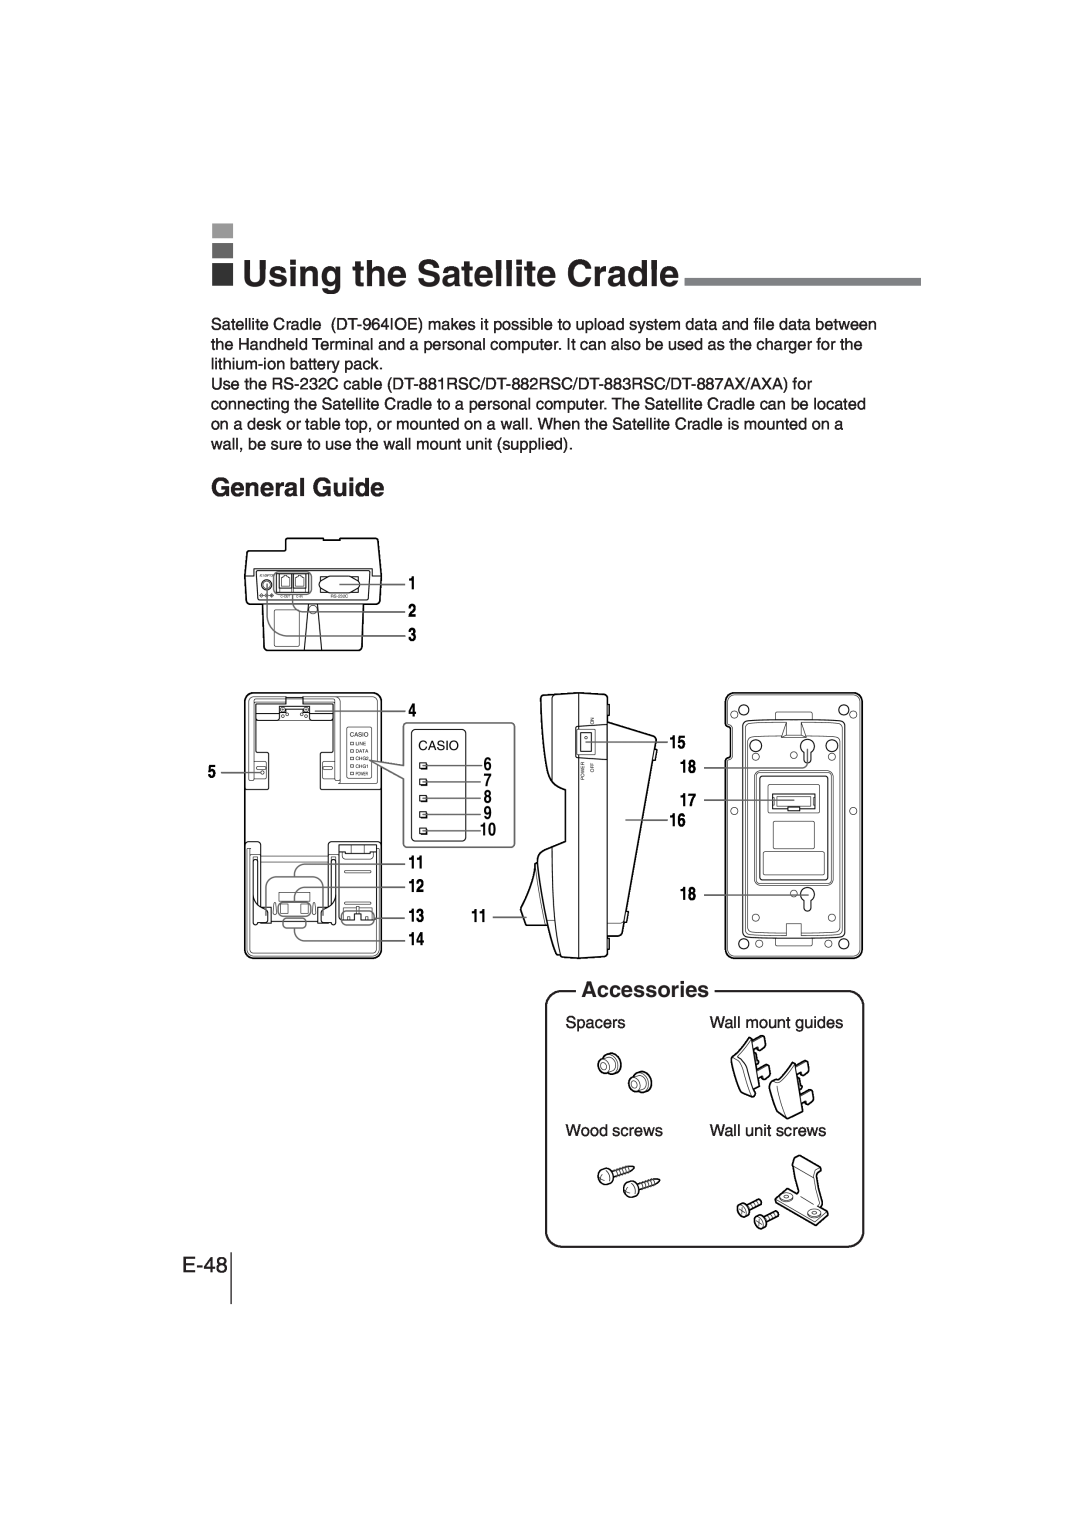 Casio DT-930 manual Using the Satellite Cradle, E-48, General Guide, Accessories 